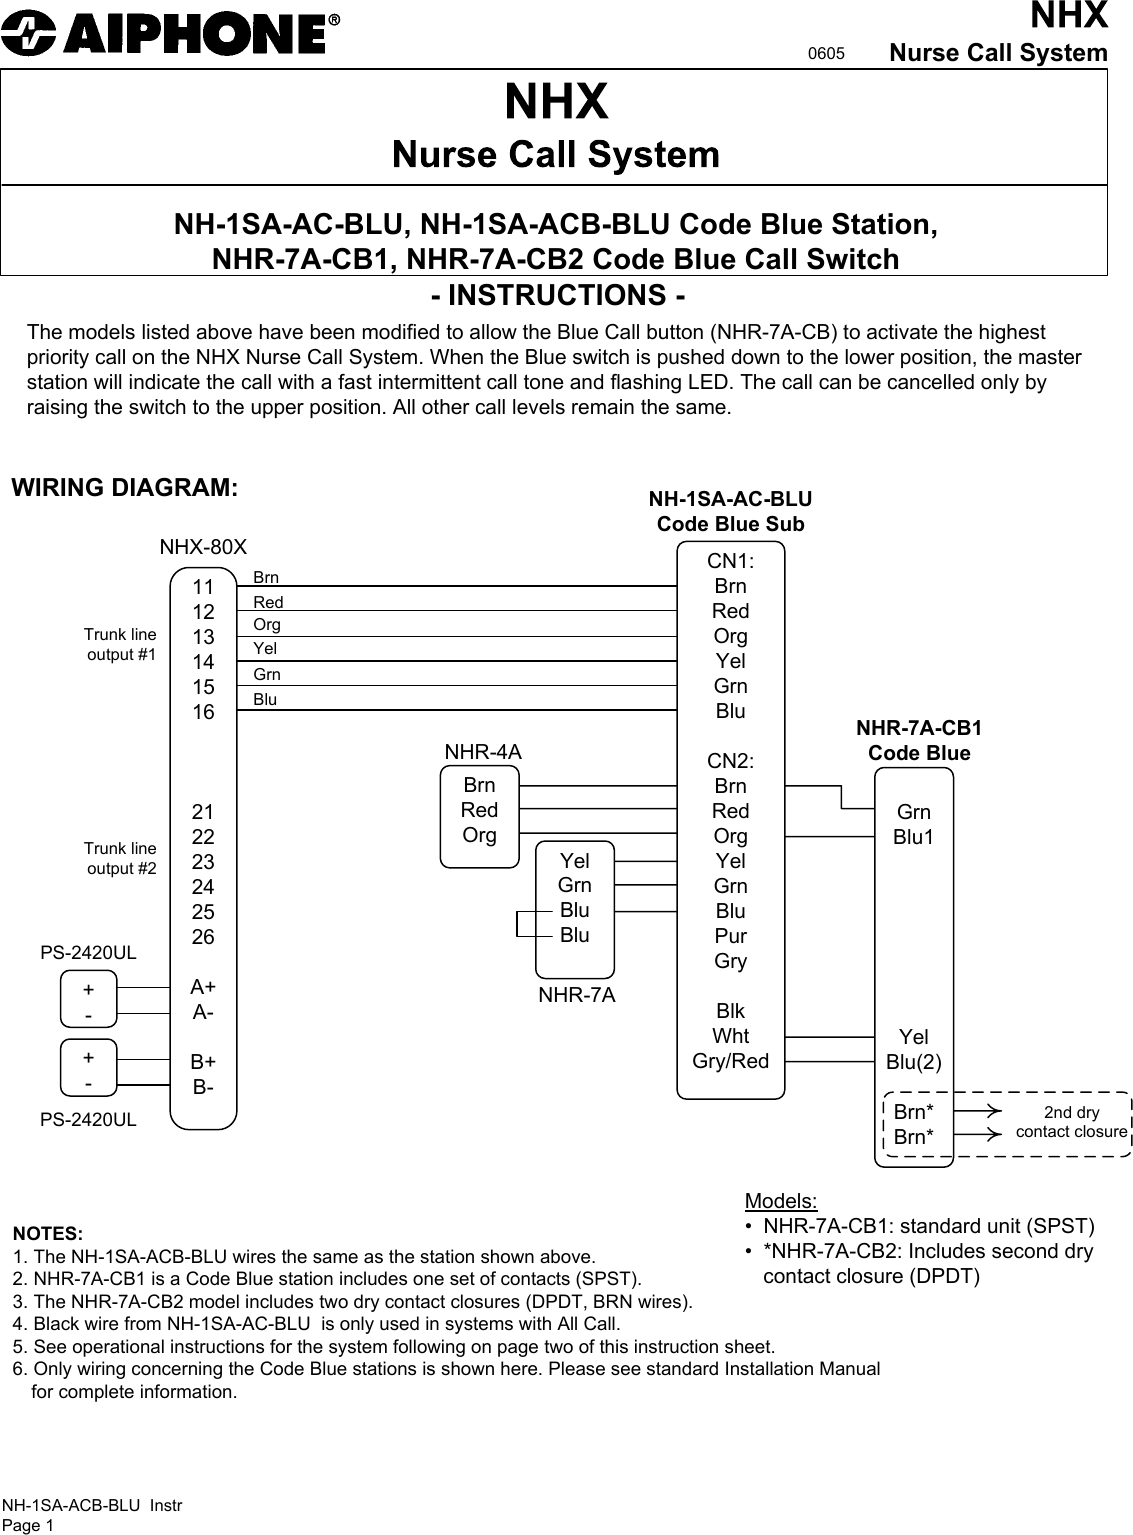 Page 1 of 2 - Aiphone Aiphone-Nhx-Nh-1Sa-Acb-Blu-Users-Manual- Visio-NH-1SA-Code Blue, NHR-7A-CB Instr  Aiphone-nhx-nh-1sa-acb-blu-users-manual